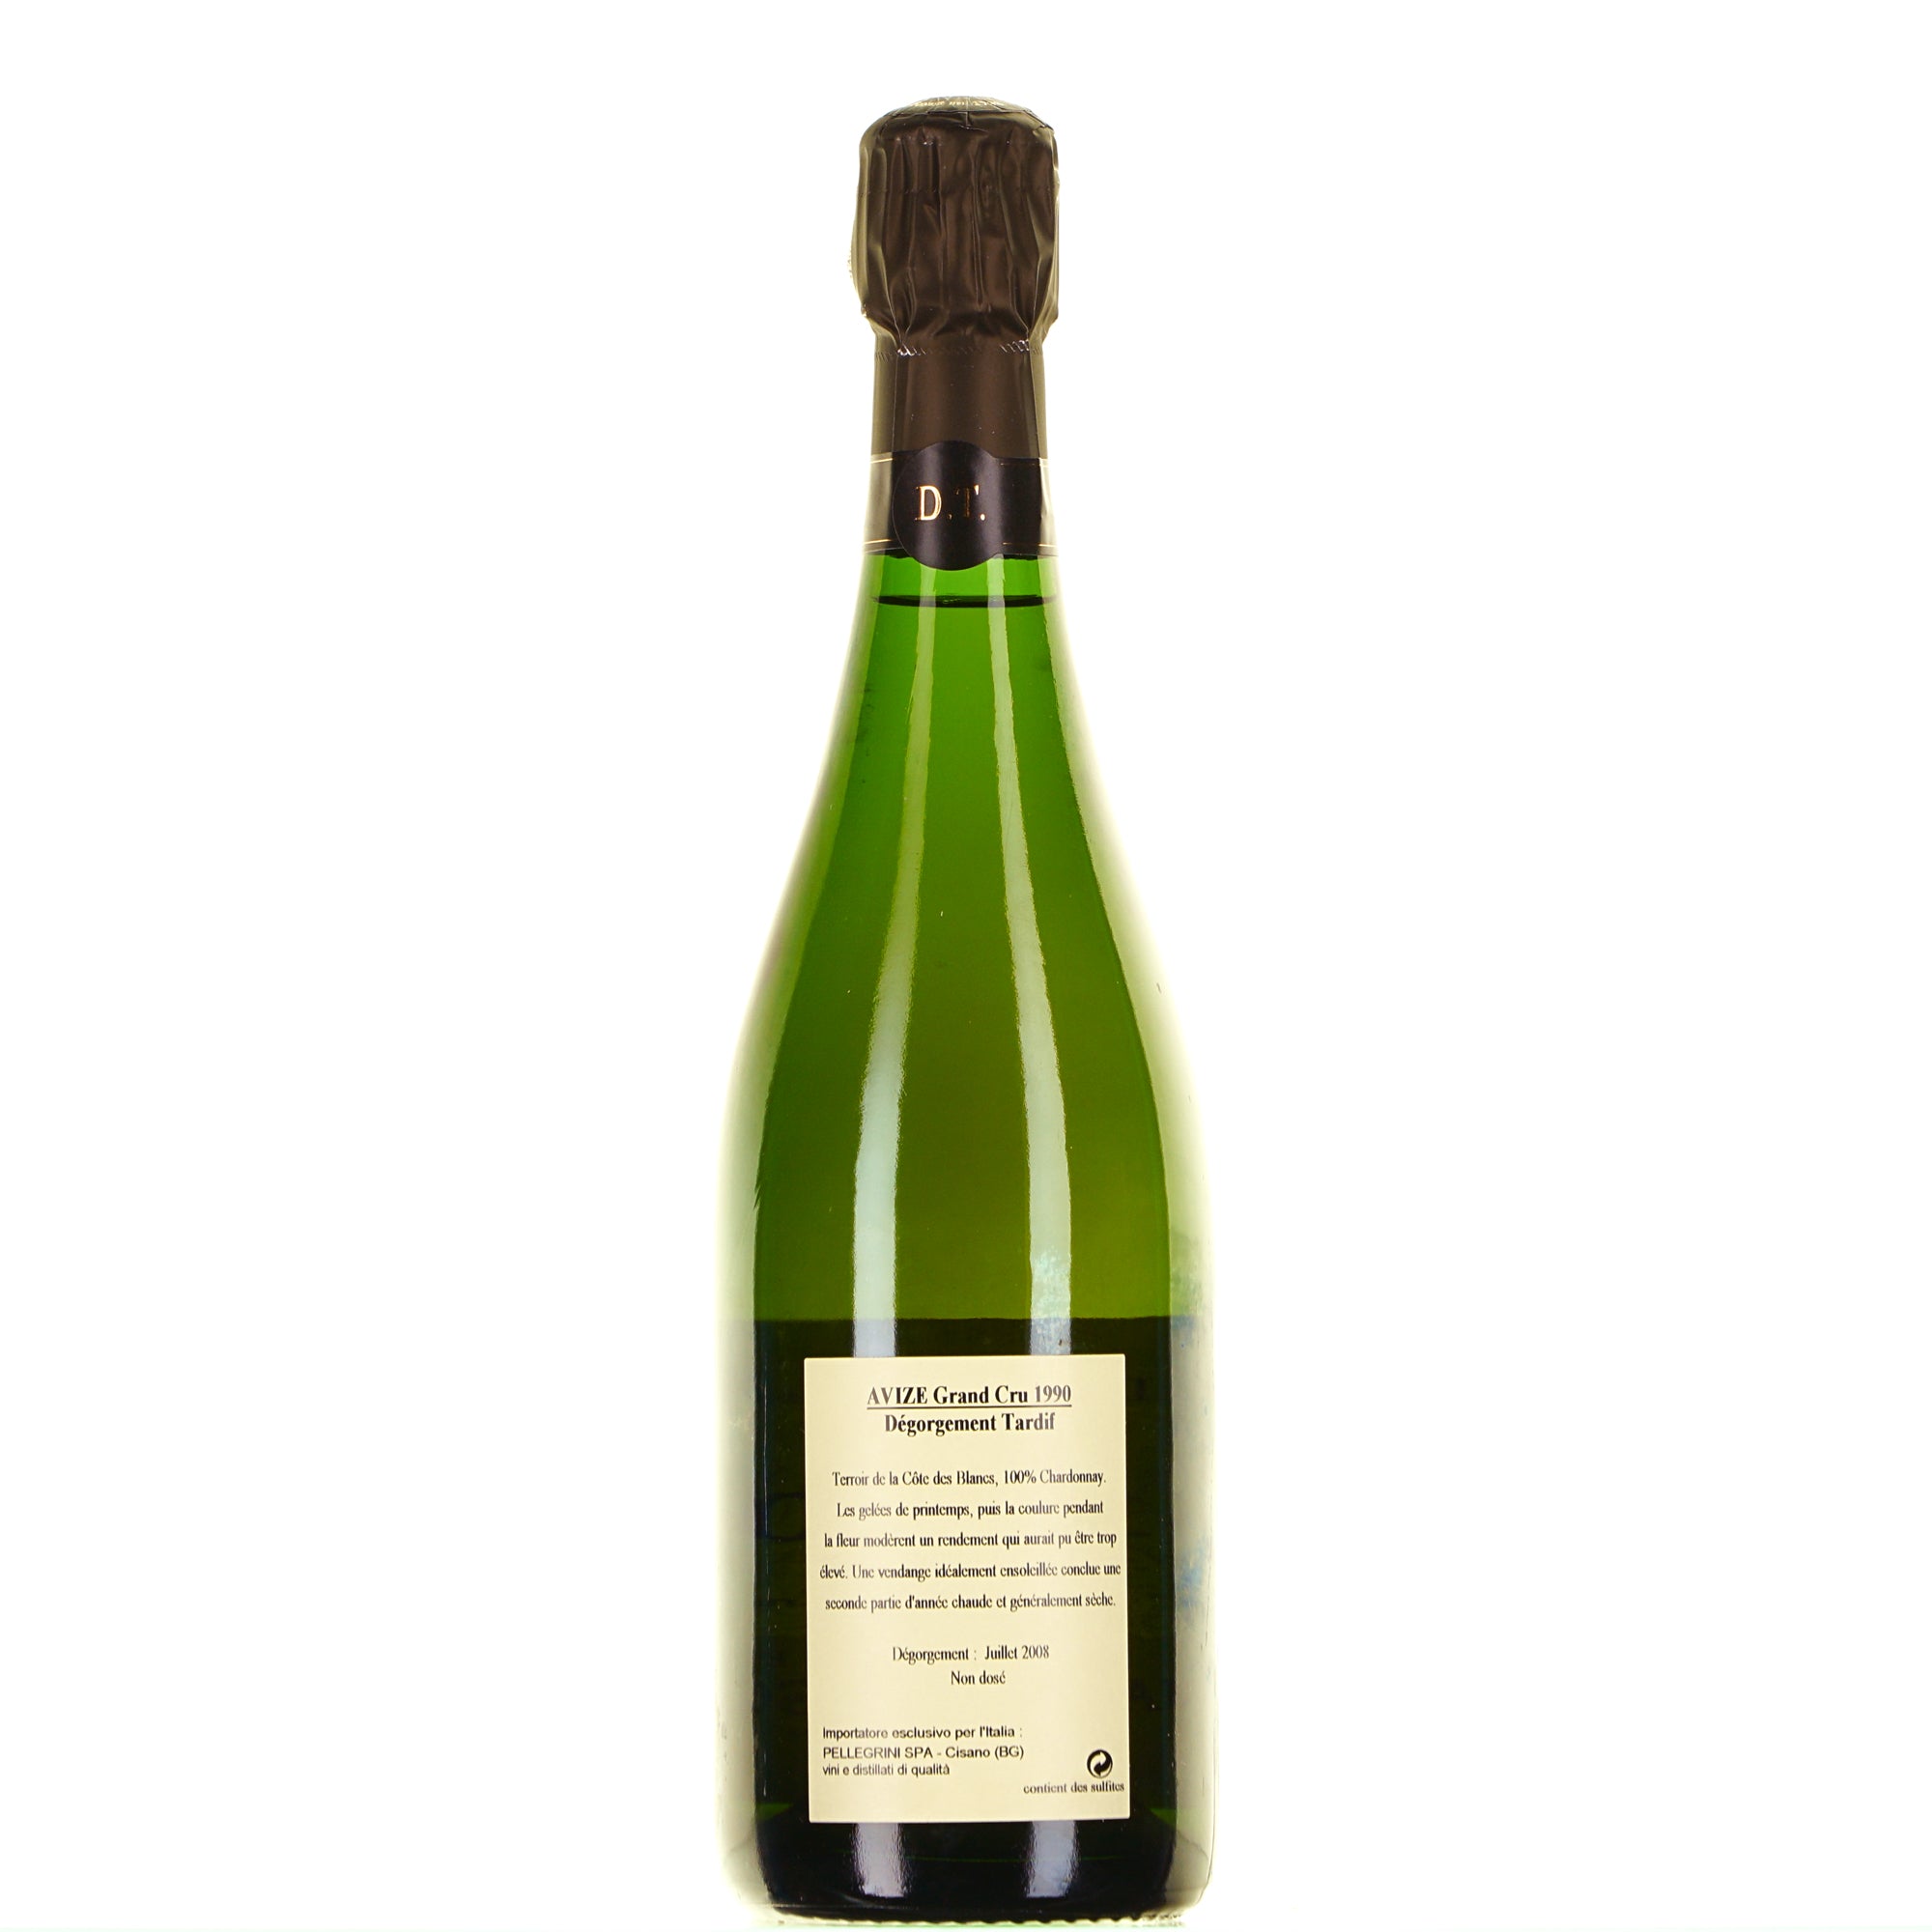 Champagne Avize 1990 Grand Cru Degorgement Tardif Jacquesson lt. 0.750